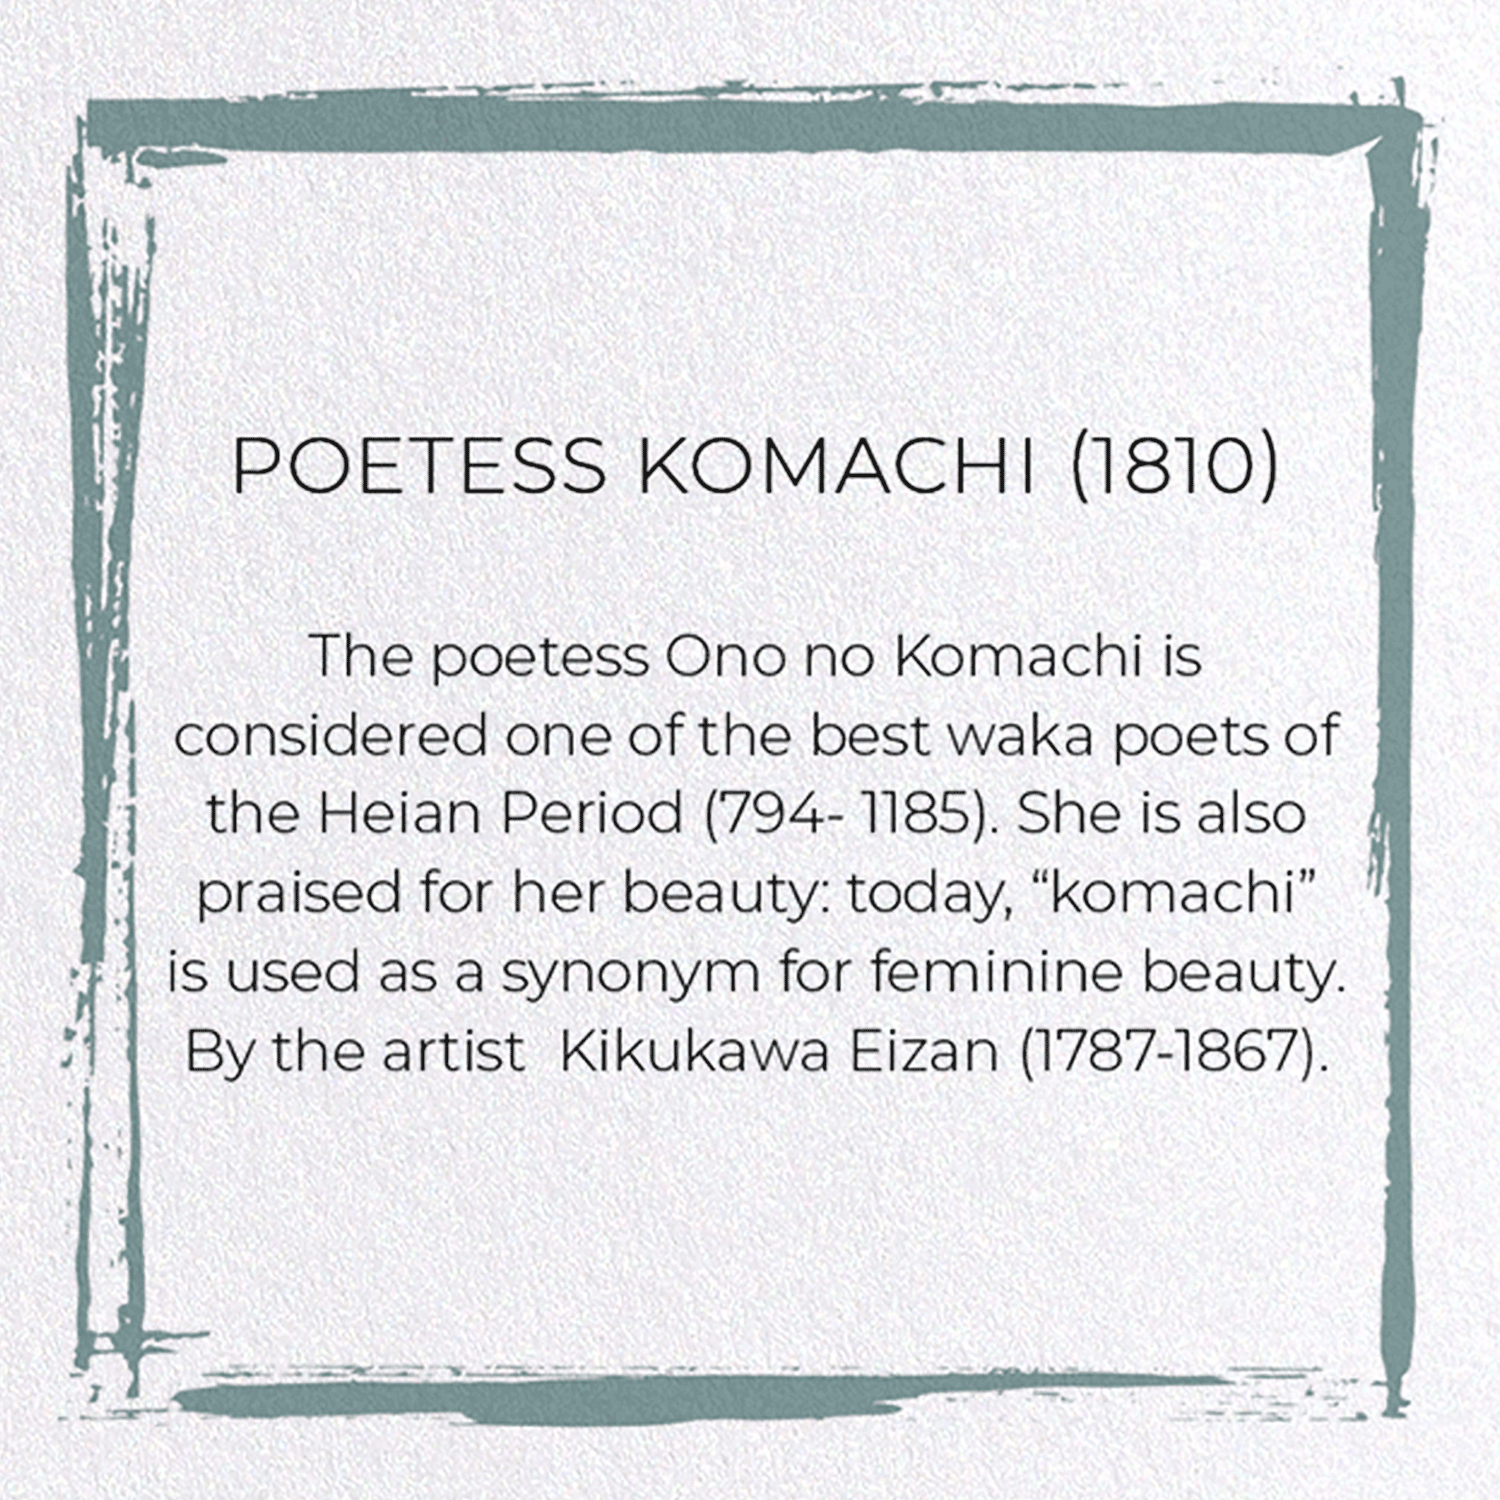 POETESS KOMACHI (1810)